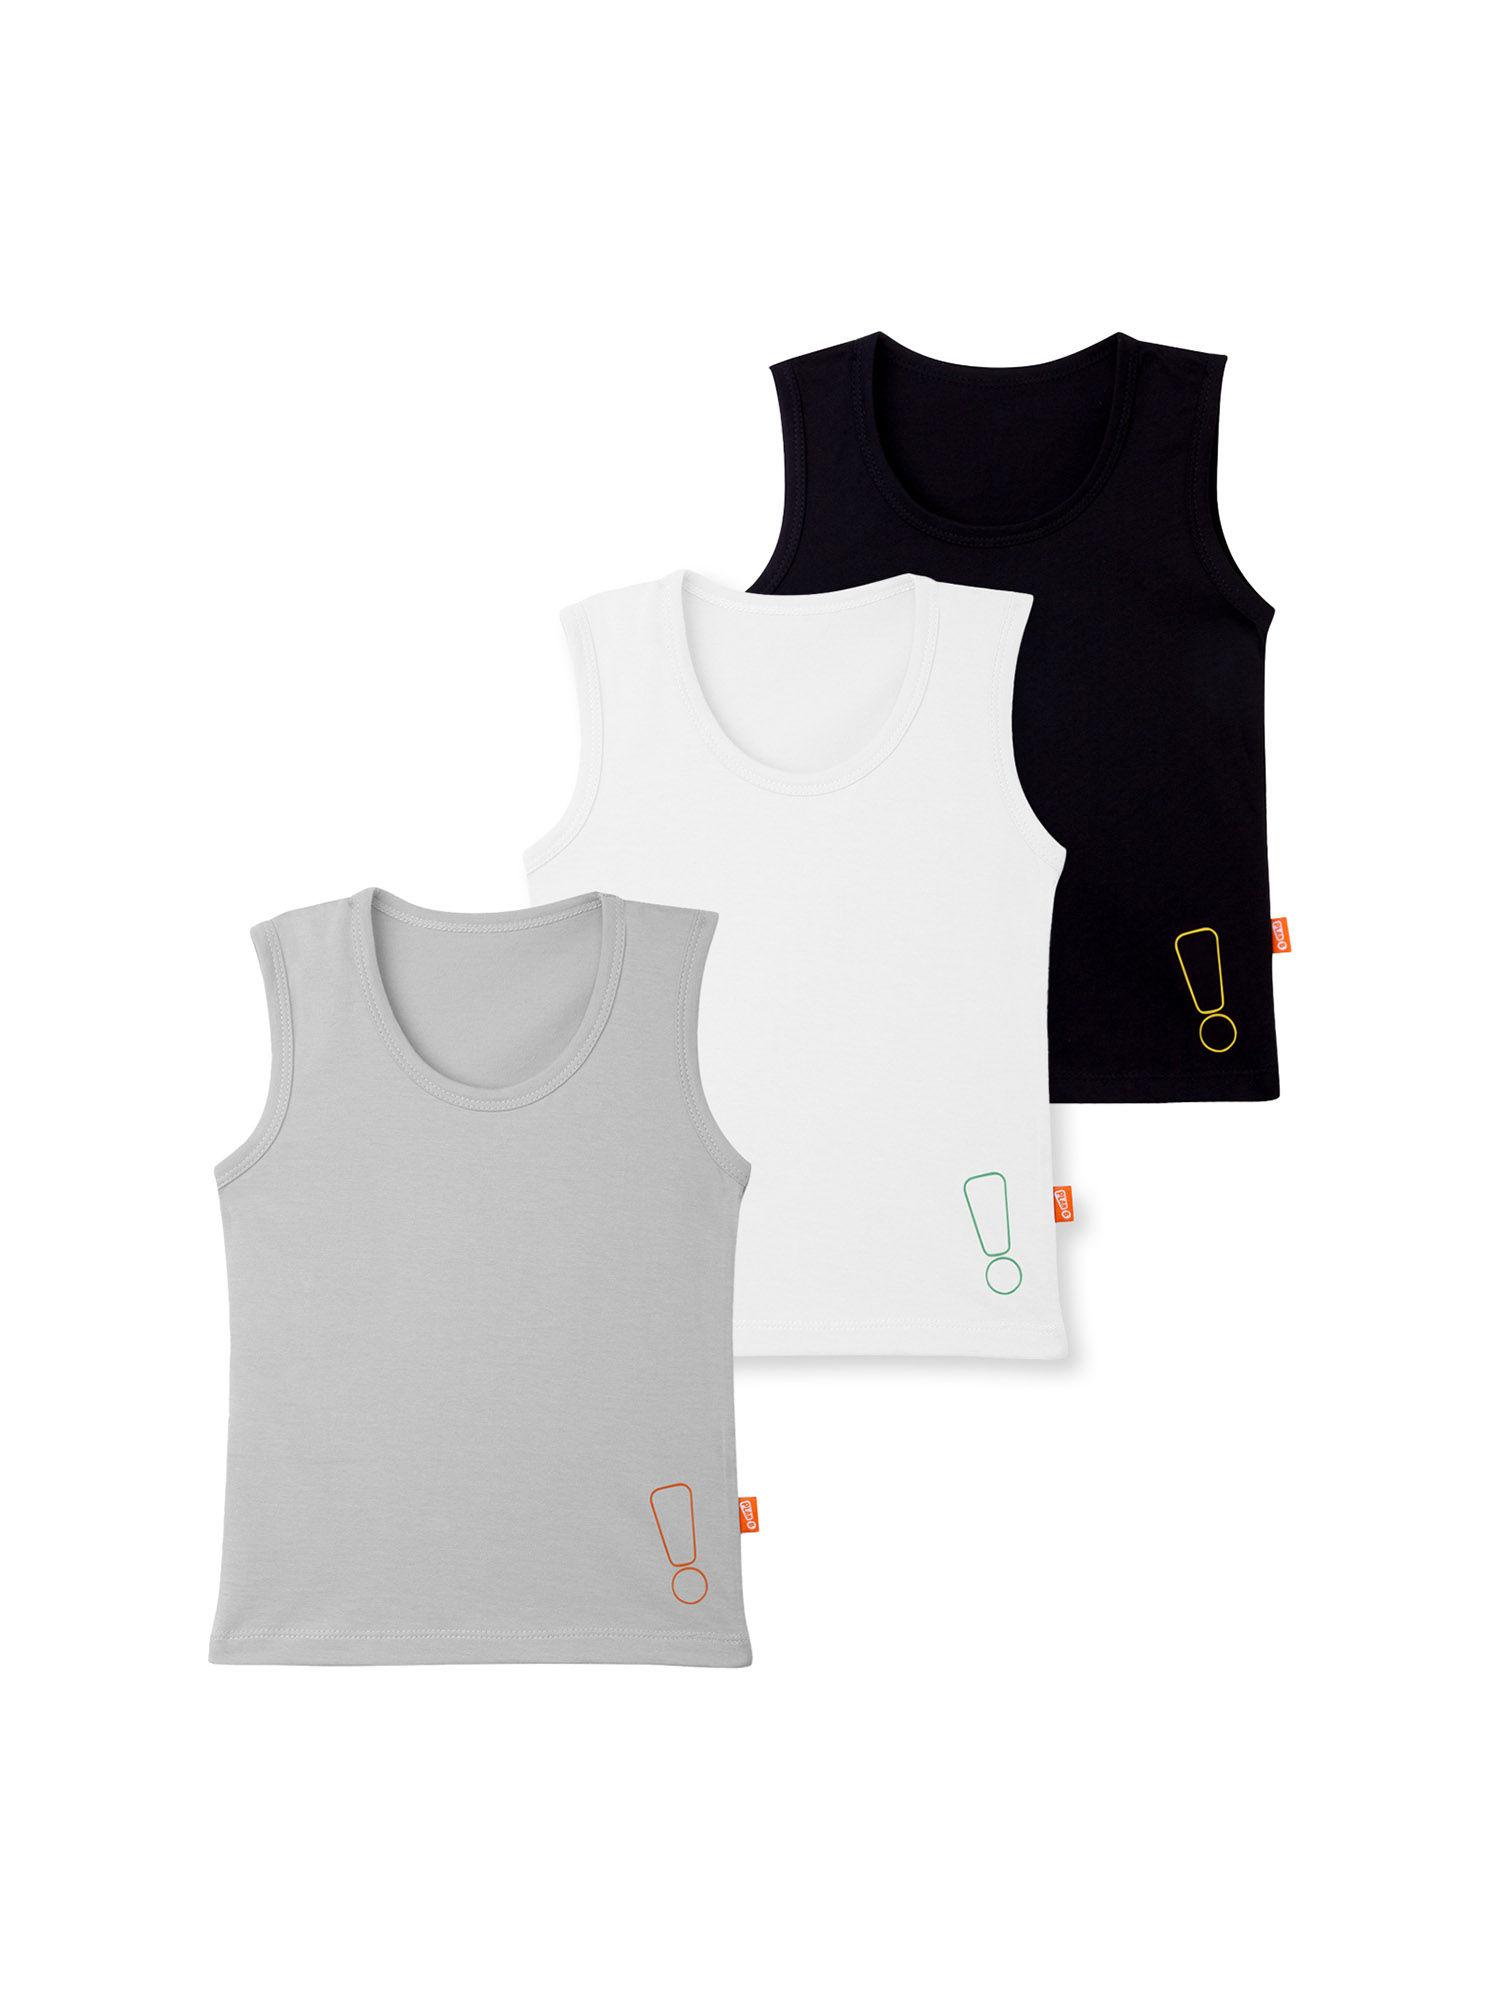 Basics Vests (Pack of 3)